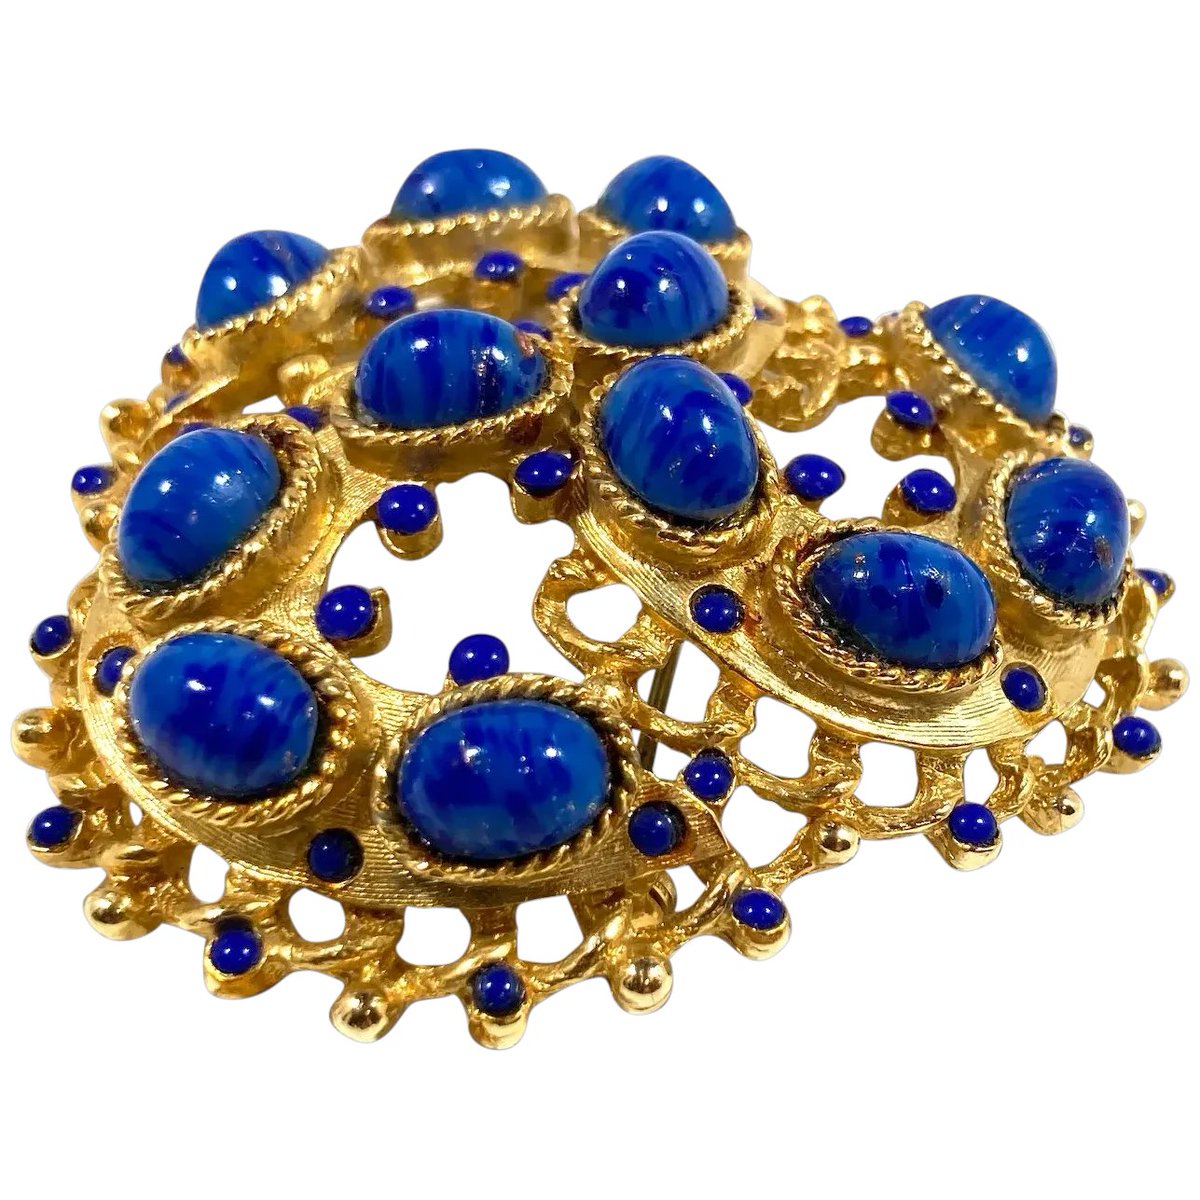 Dimensional Textured Goldtone Metal Imitation Lapis Cabochons Brooch
#rubylane #vintage #brooch #vintagejewelry #giftideas #jewelryaddict #vintagebeginshere #fashionista #diva #glam
rubylane.com/item/136230-E1…